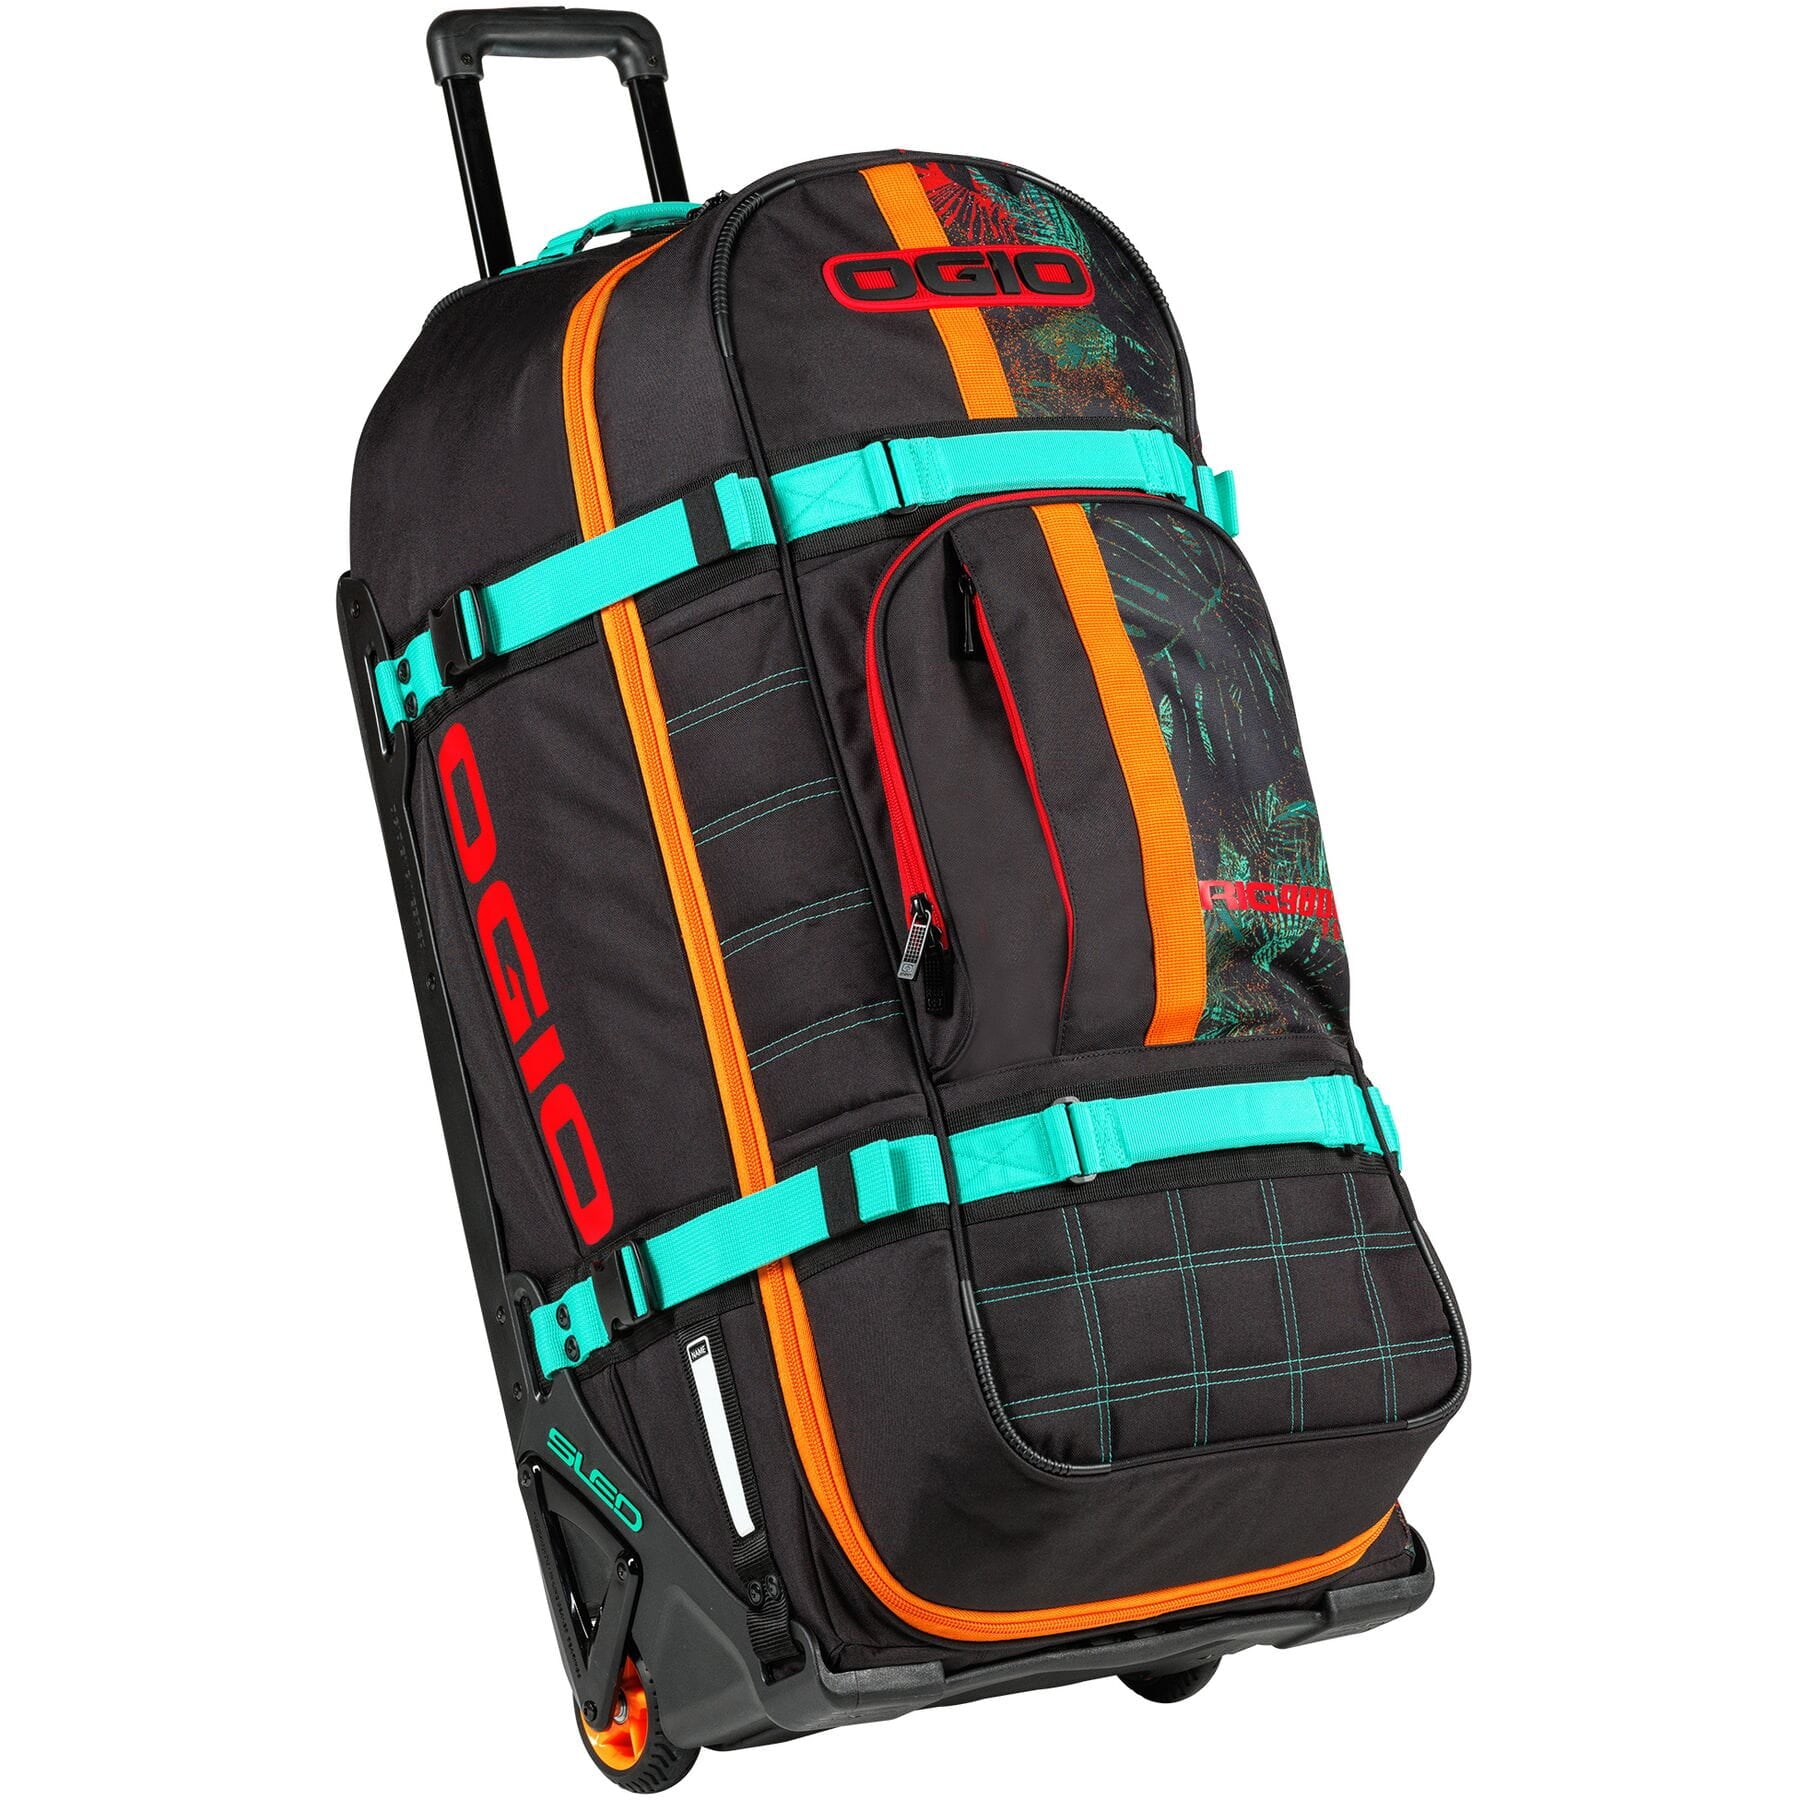 Ogio Rig 9800 PRO Gear Bag Tropic